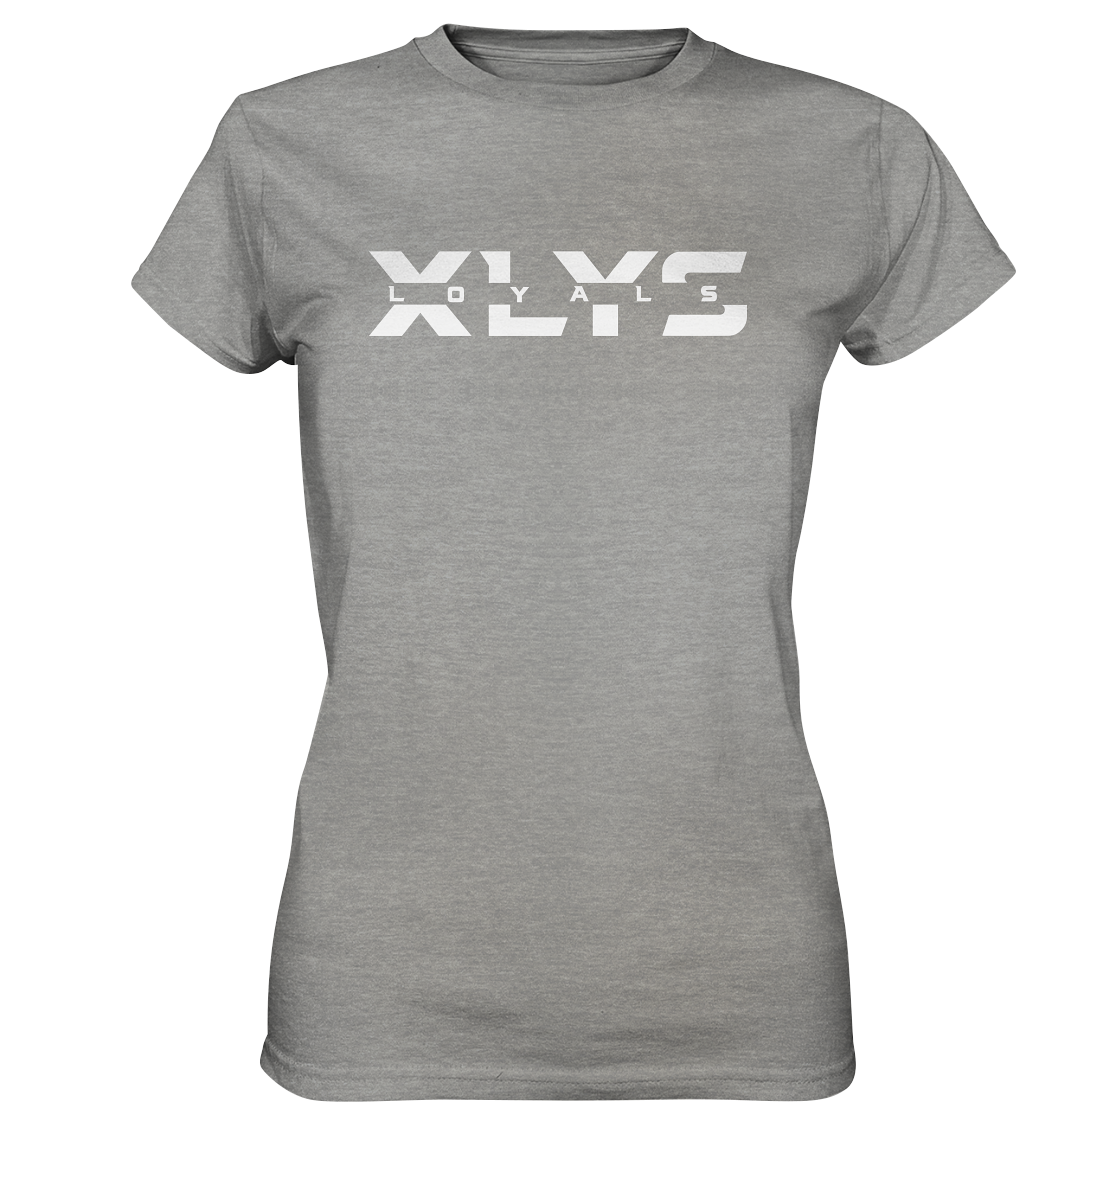 XLYS LOYALS - Ladies Basic Shirt